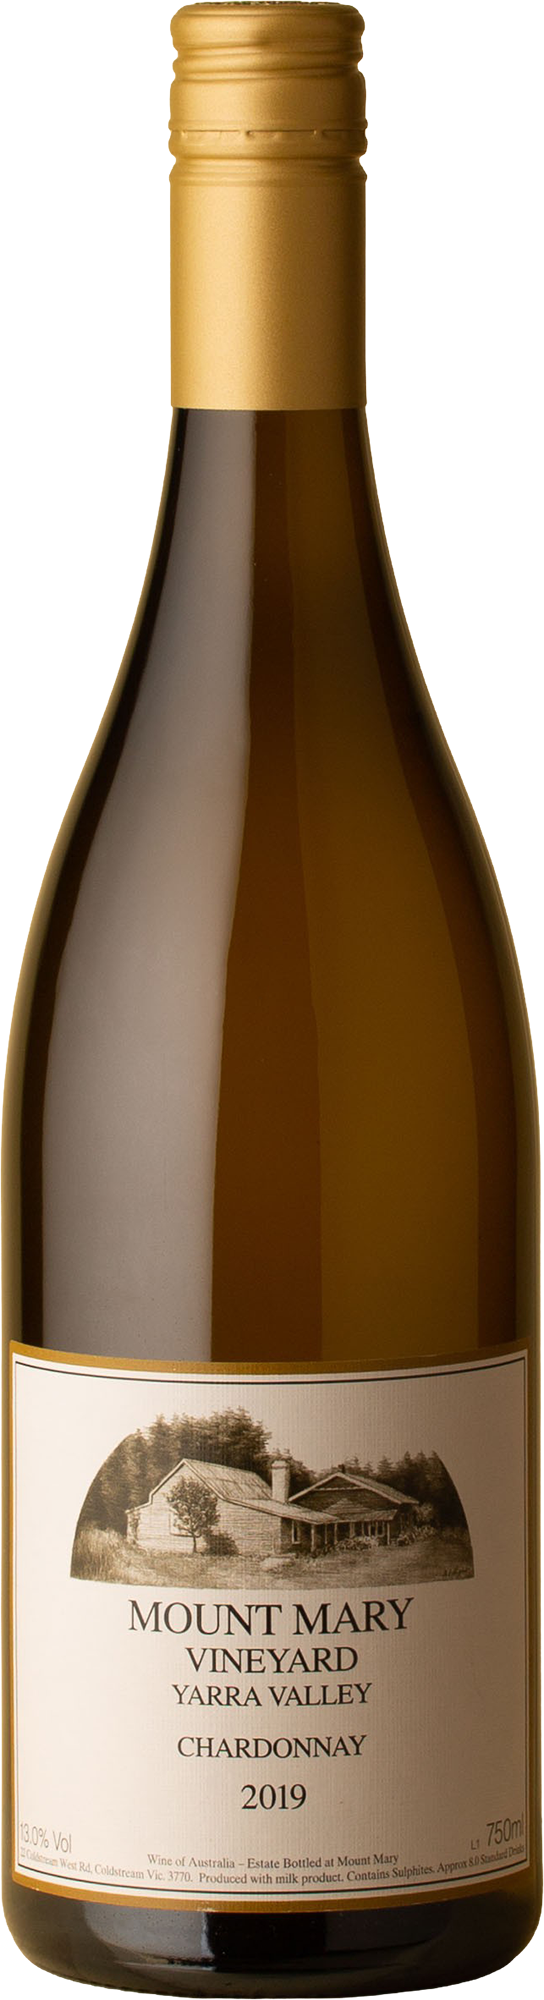 Mount Mary - Chardonnay 2019 White Wine